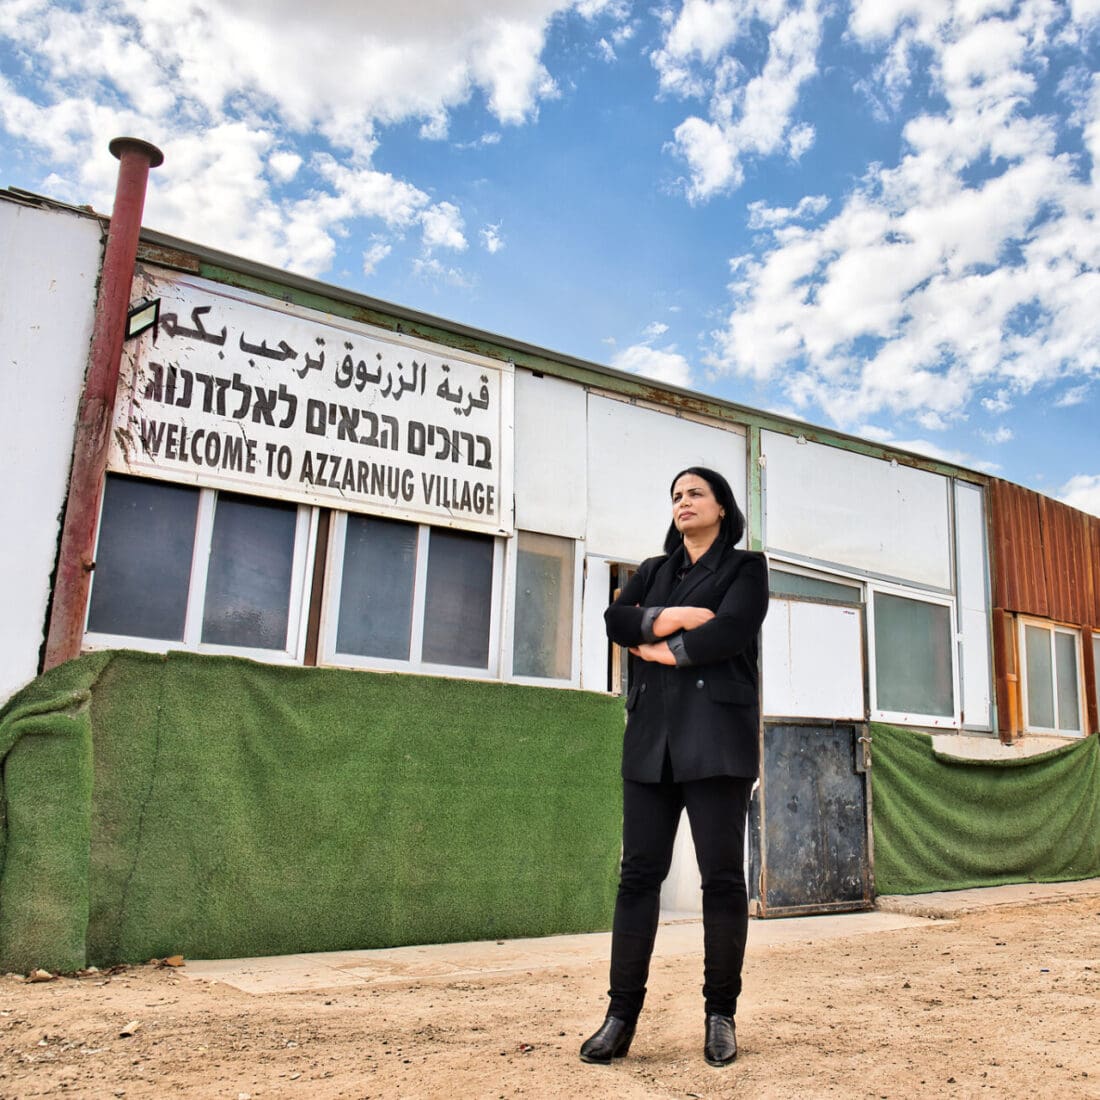 Bedouin attorney, Hanan Alsanah, at the unrecognized village of Az-Zarnug in the Negev desert. Photo by Noam Chen